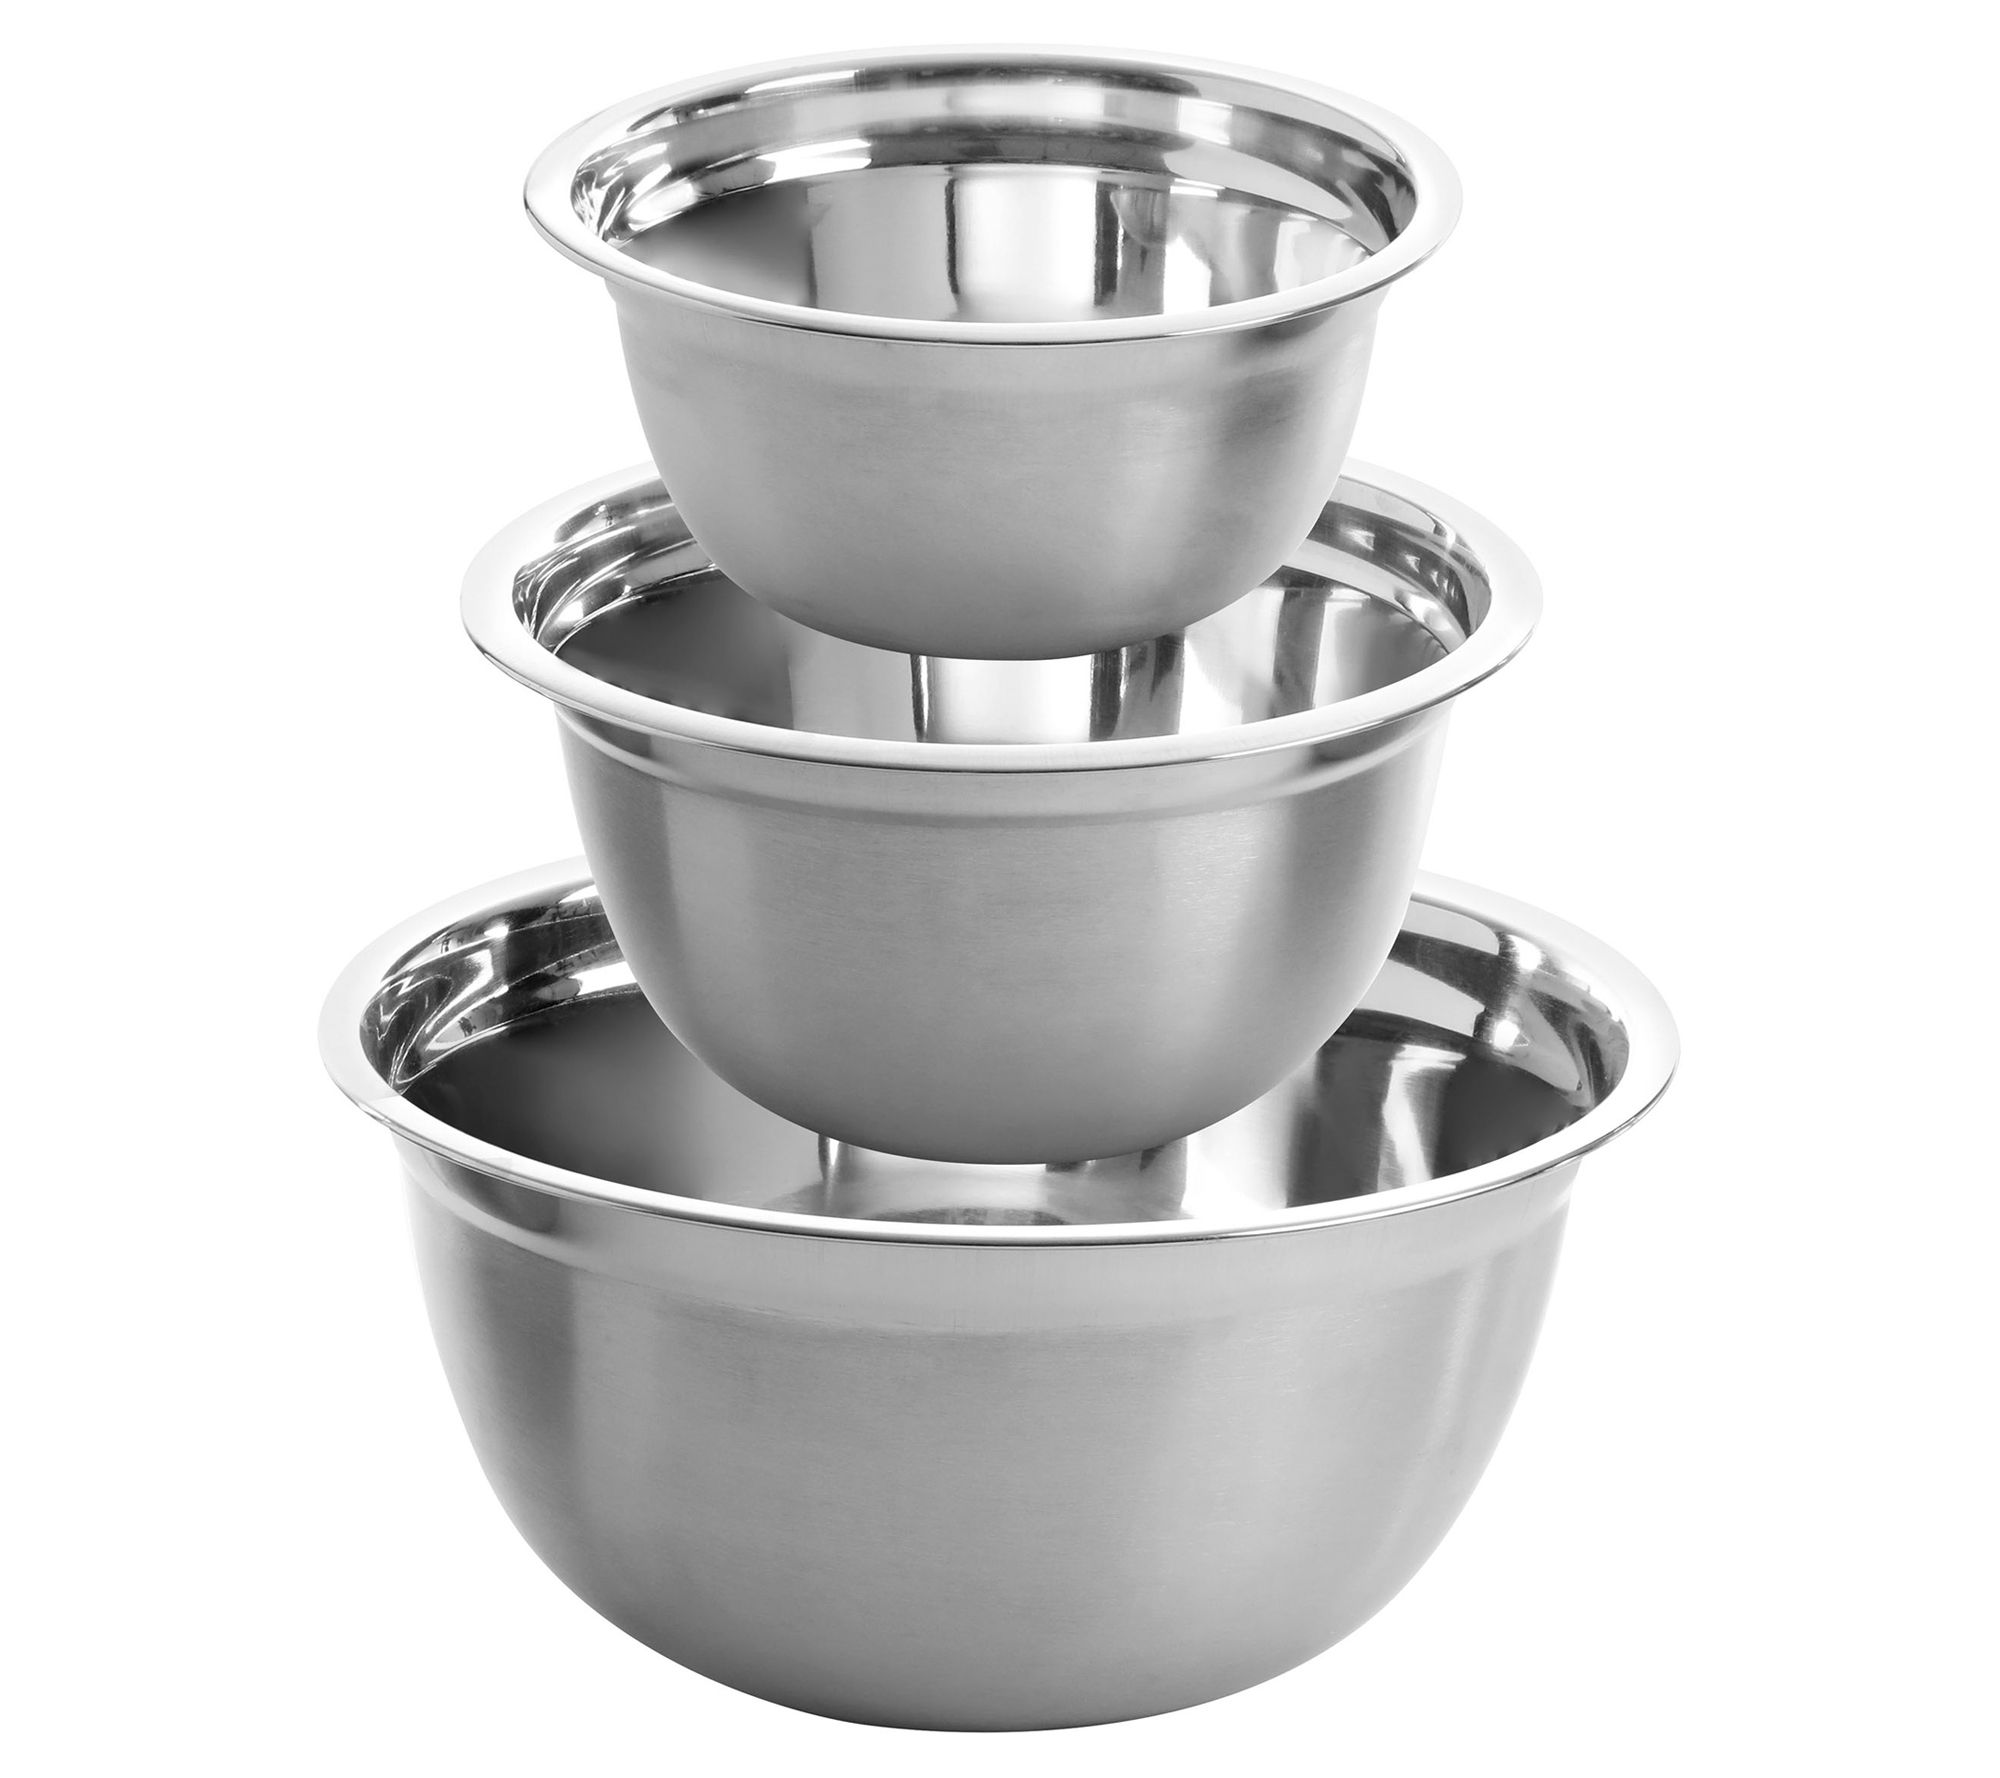 JoyJolt 6-Piece Stainless Steel Mixing Bowl Set 